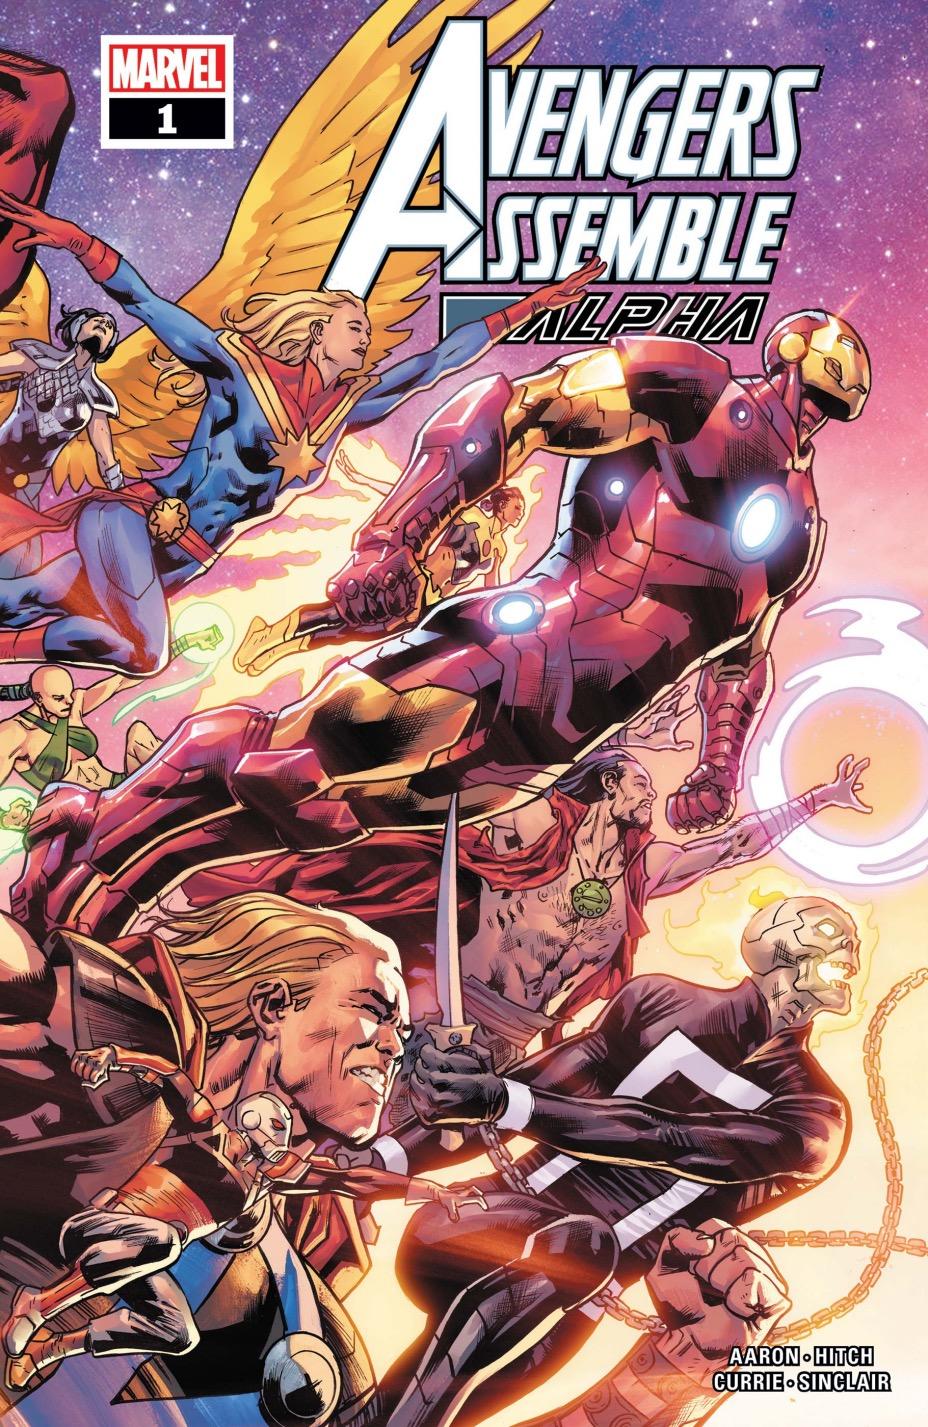 Marvel’s Multiversal Avengers Assemble in New Preview